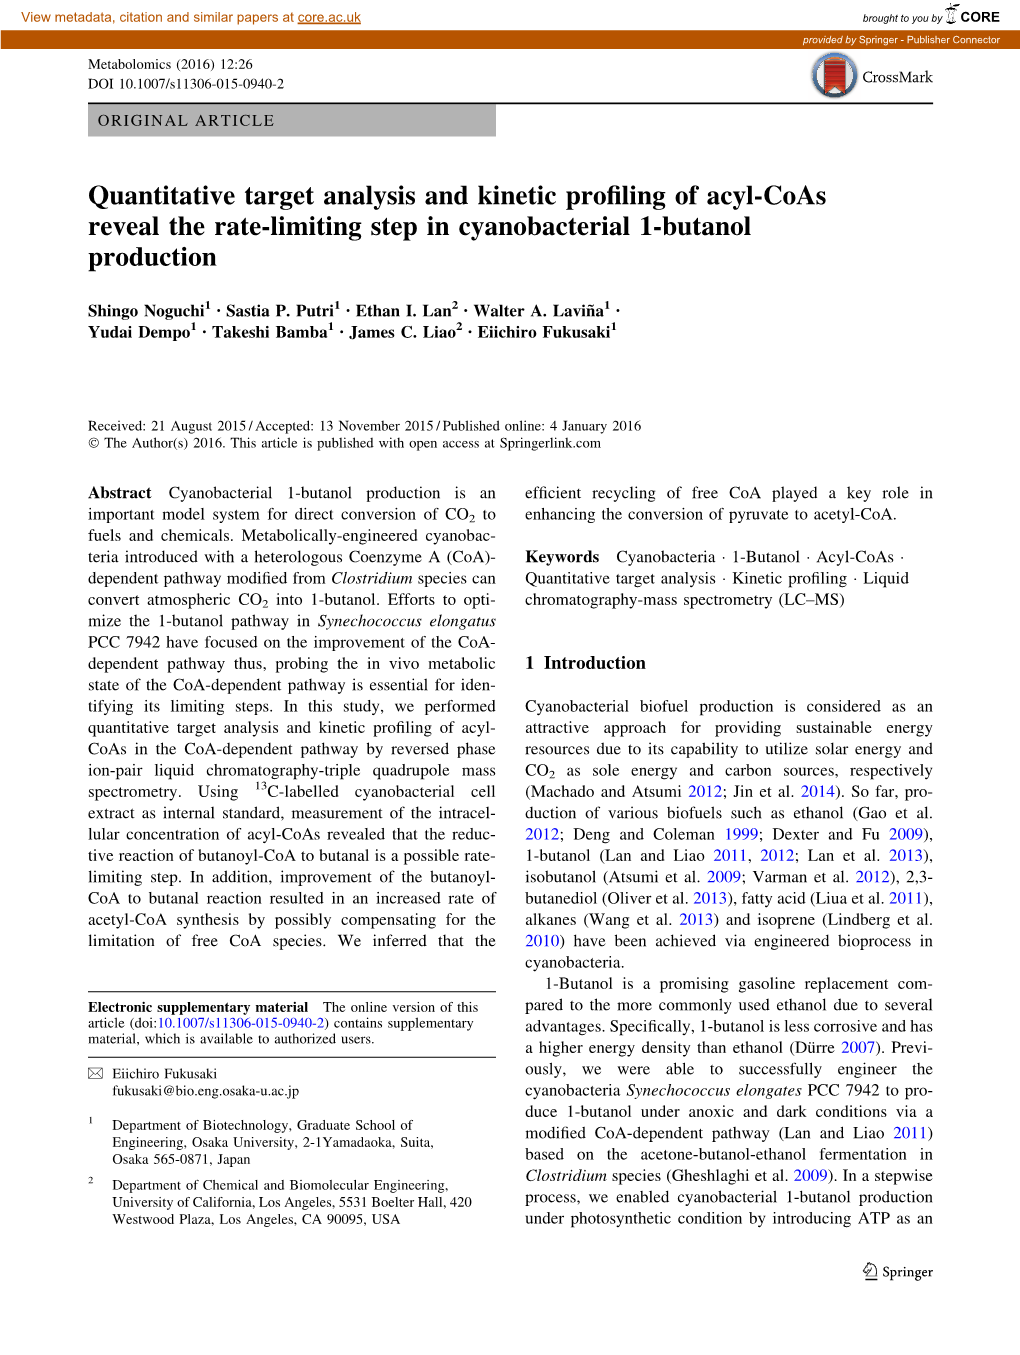 Quantitative Target Analysis and Kinetic Profiling of Acyl-Coas